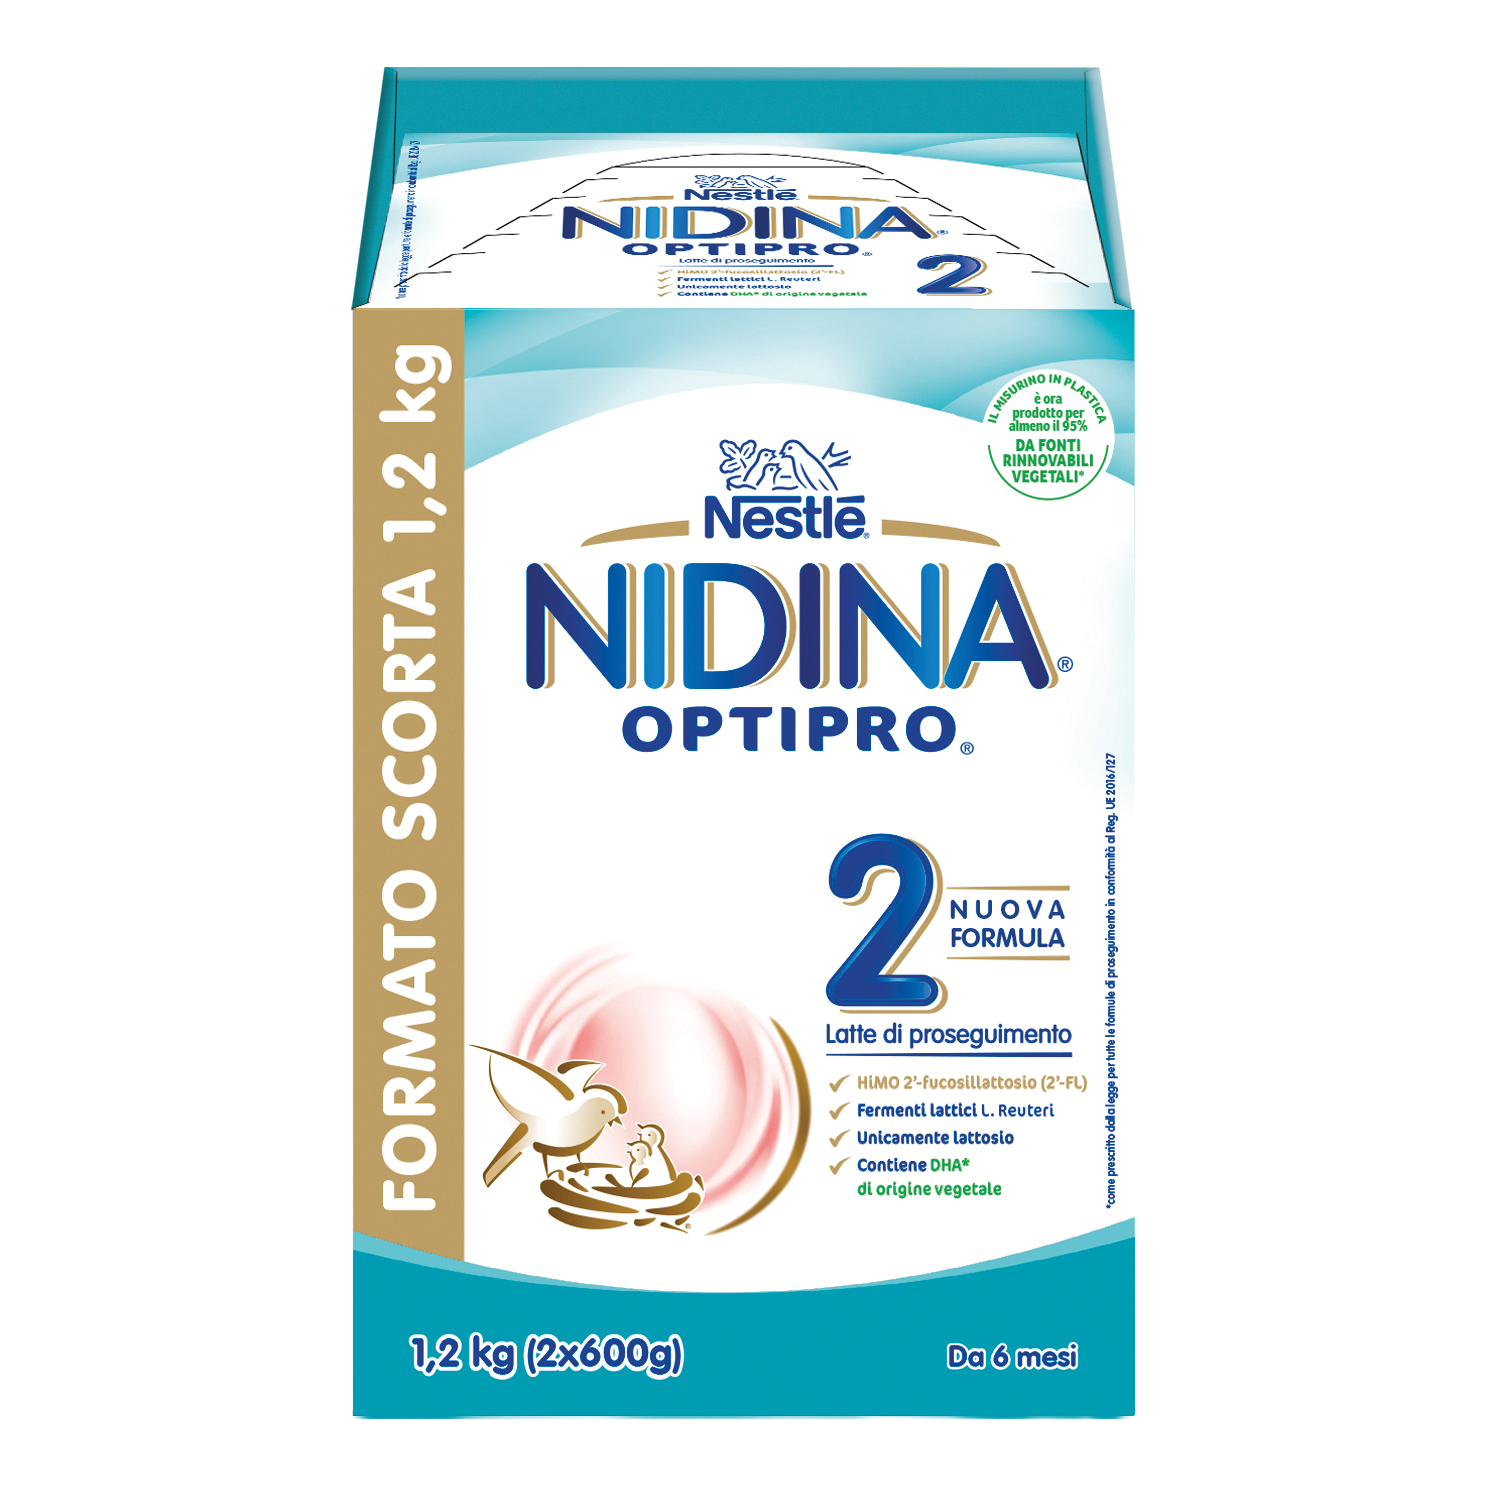 NIDINA OPTIPRO 3 LIQUIDO 1 LITRO – Farmaciainrete